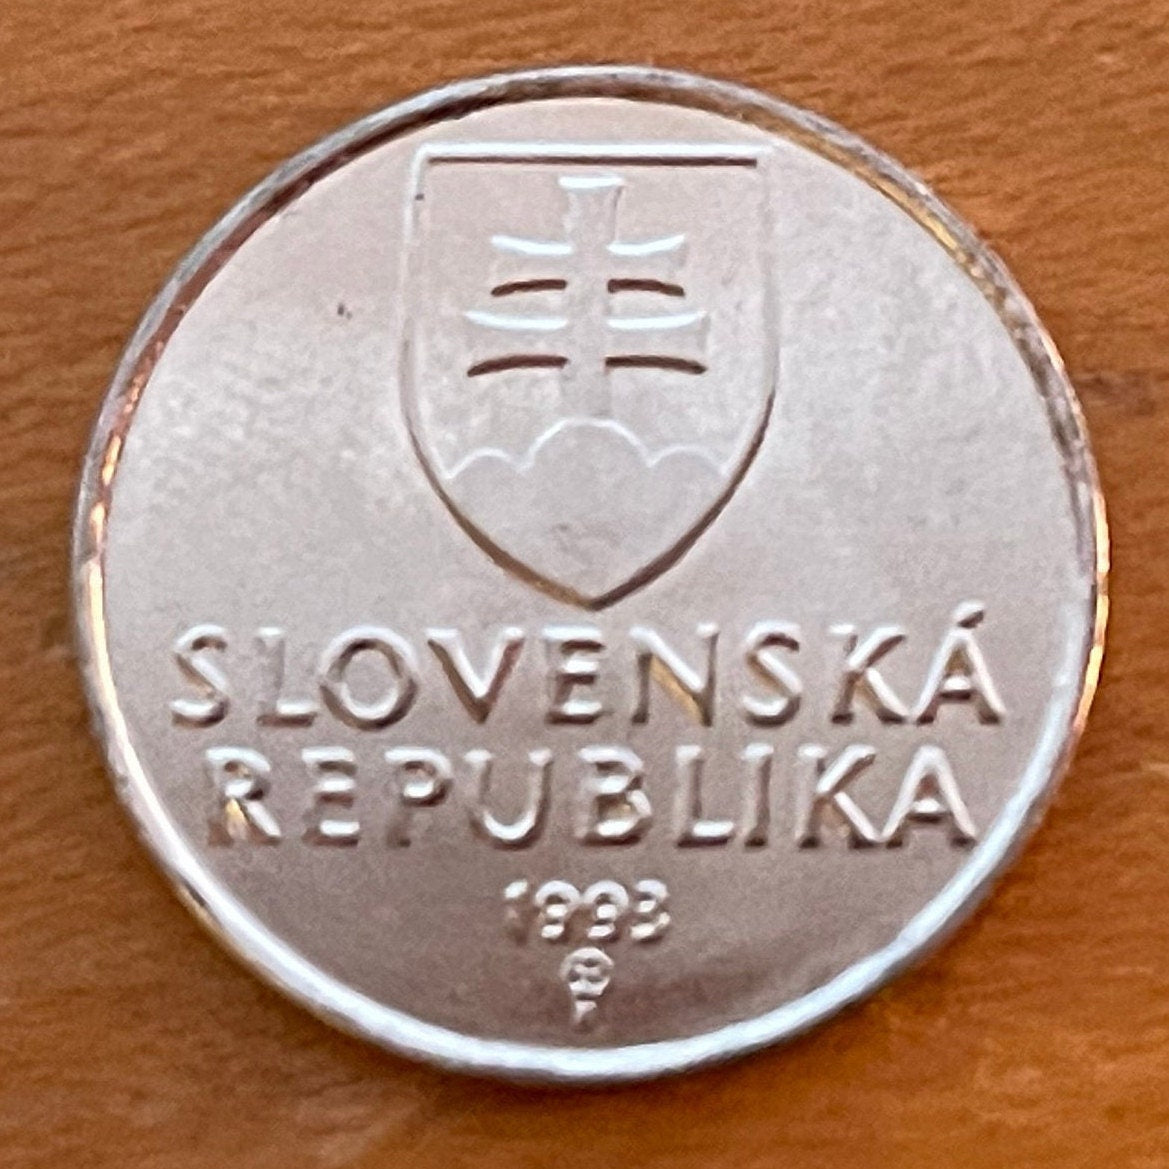 Venus of Hrádok 2 Koruny Slovak Republic Authentic Coin Money for Jewelry (Jaroslav Gubric) (Hrádocká Venuša) (Neolithic) (Slovak Troy)